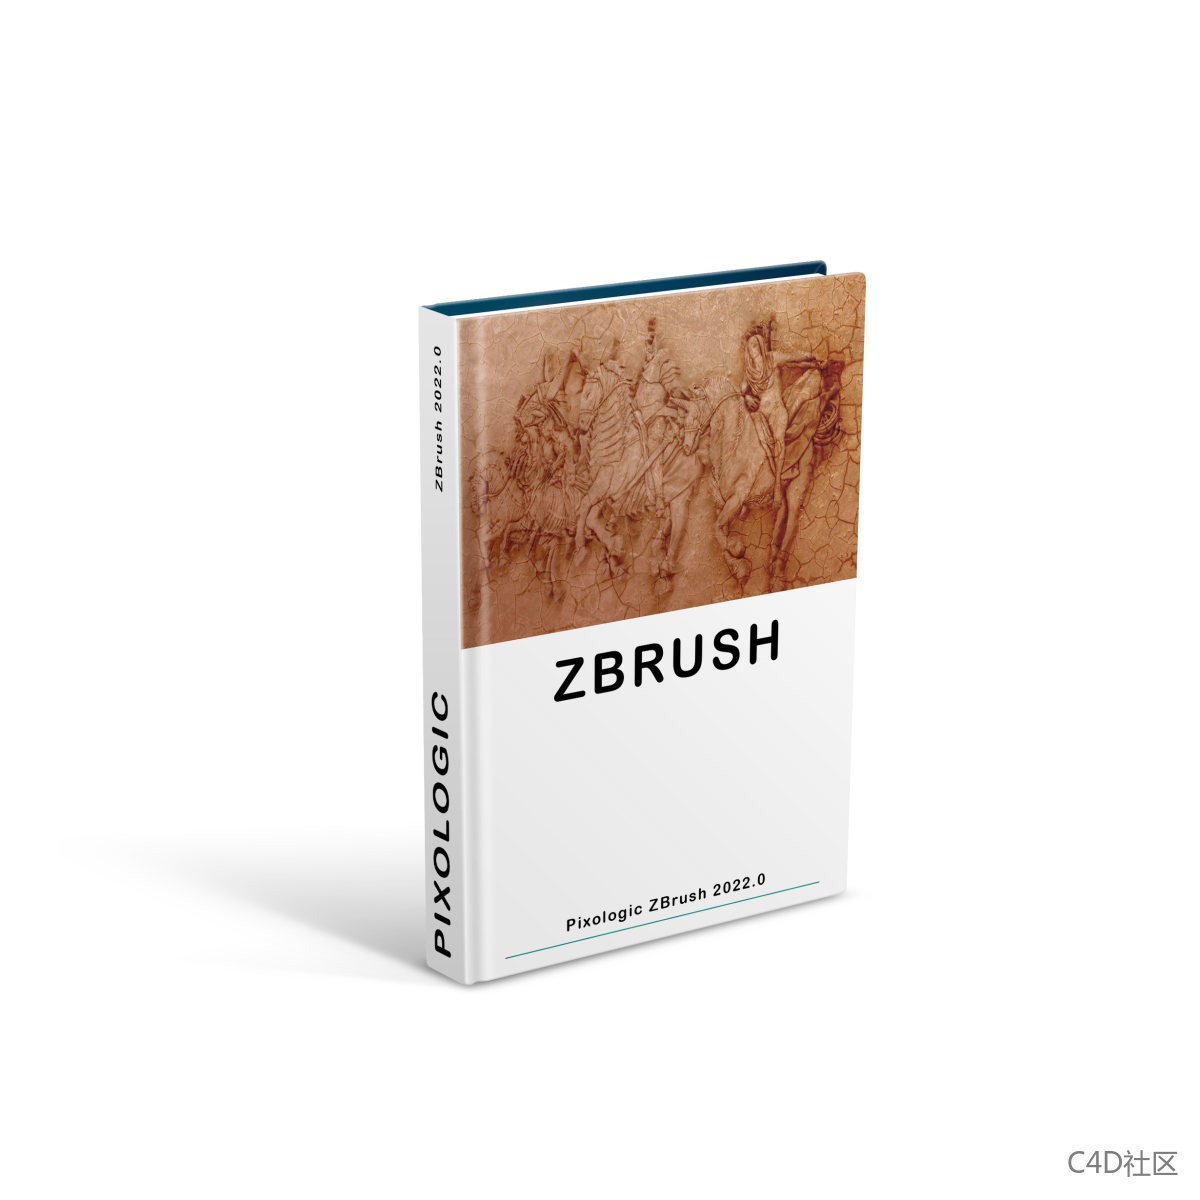 Pixologic ZBrush 2022.0 简体中文破解版【替换补丁】